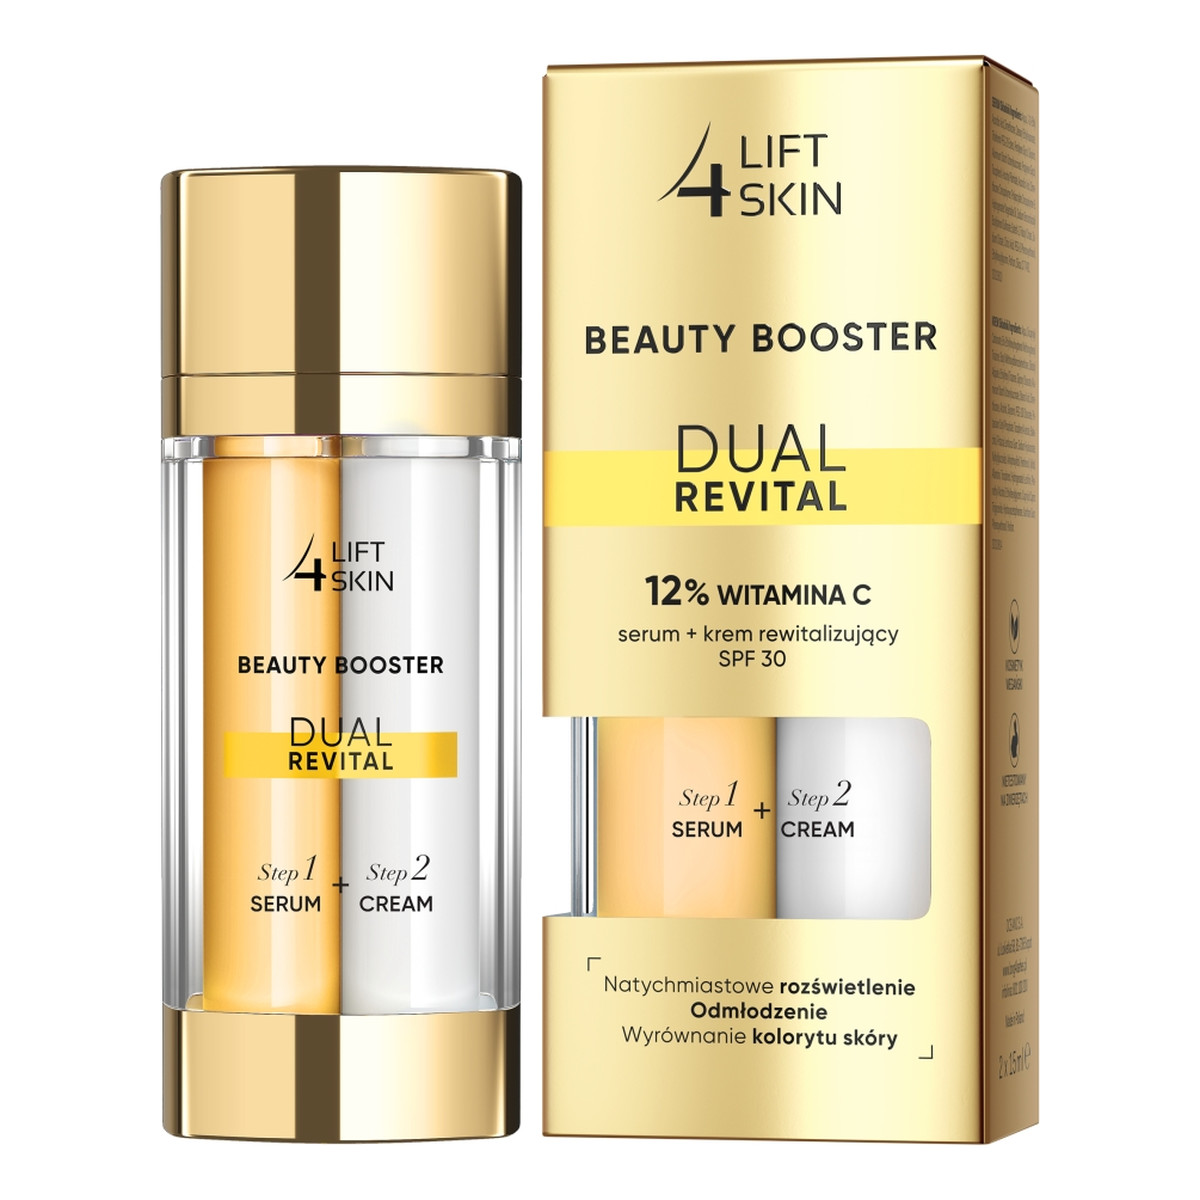 Lift 4 Skin Beauty Booster Dual Revital 12% Witamina C serum + krem rewitalizujący SPF30+ 2x15ml